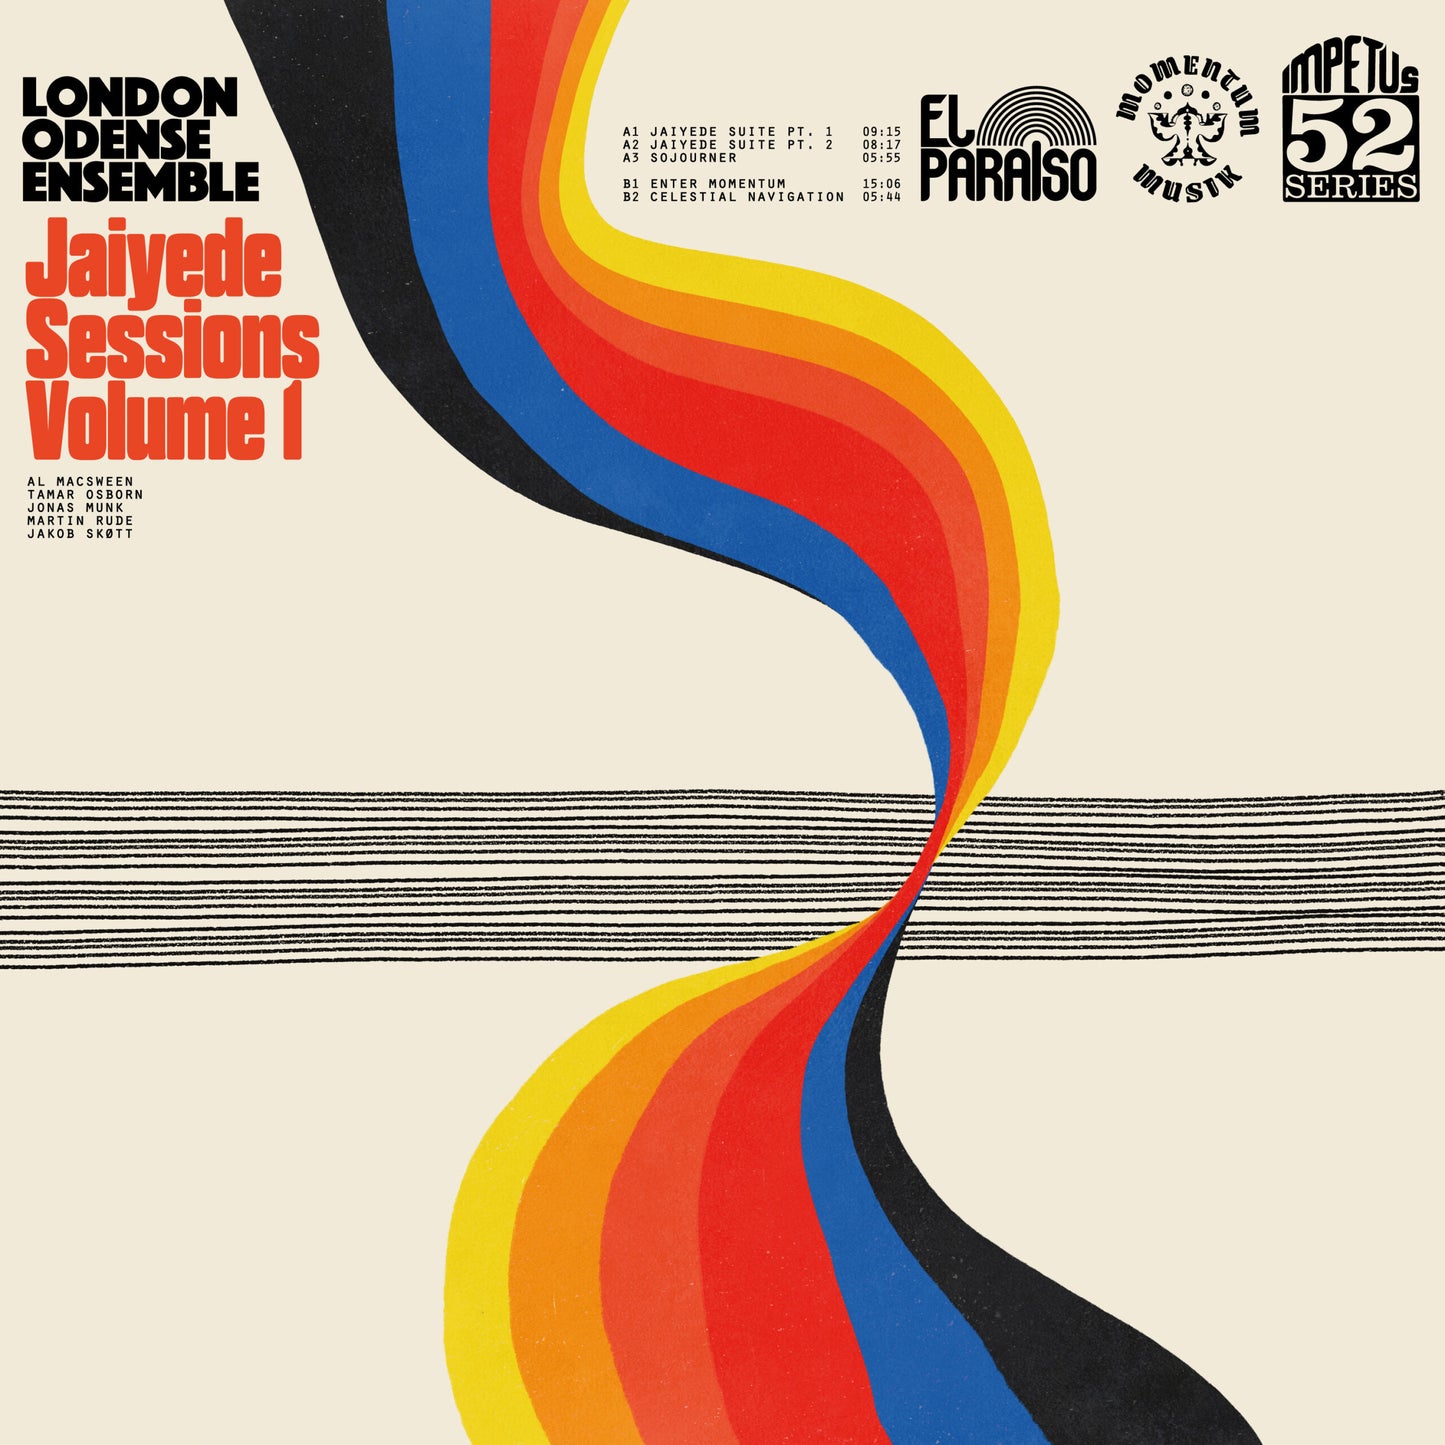 London Odense Ensemble - Jaiyede Sessions Vol. 1